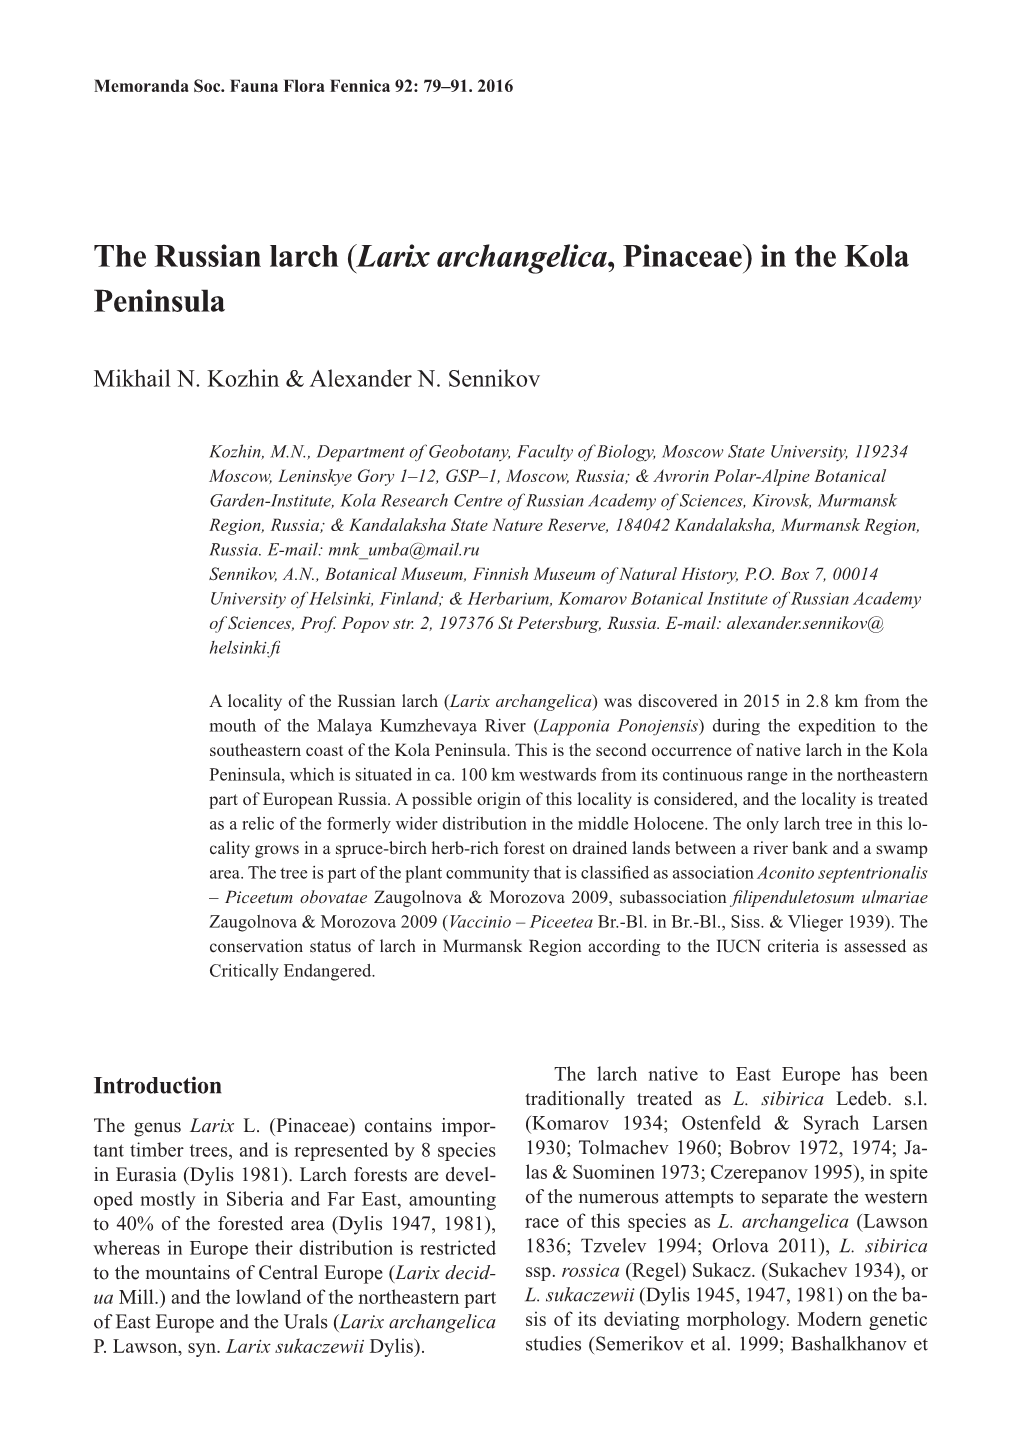 The Russian Larch (Larix Archangelica, Pinaceae) in the Kola Peninsula